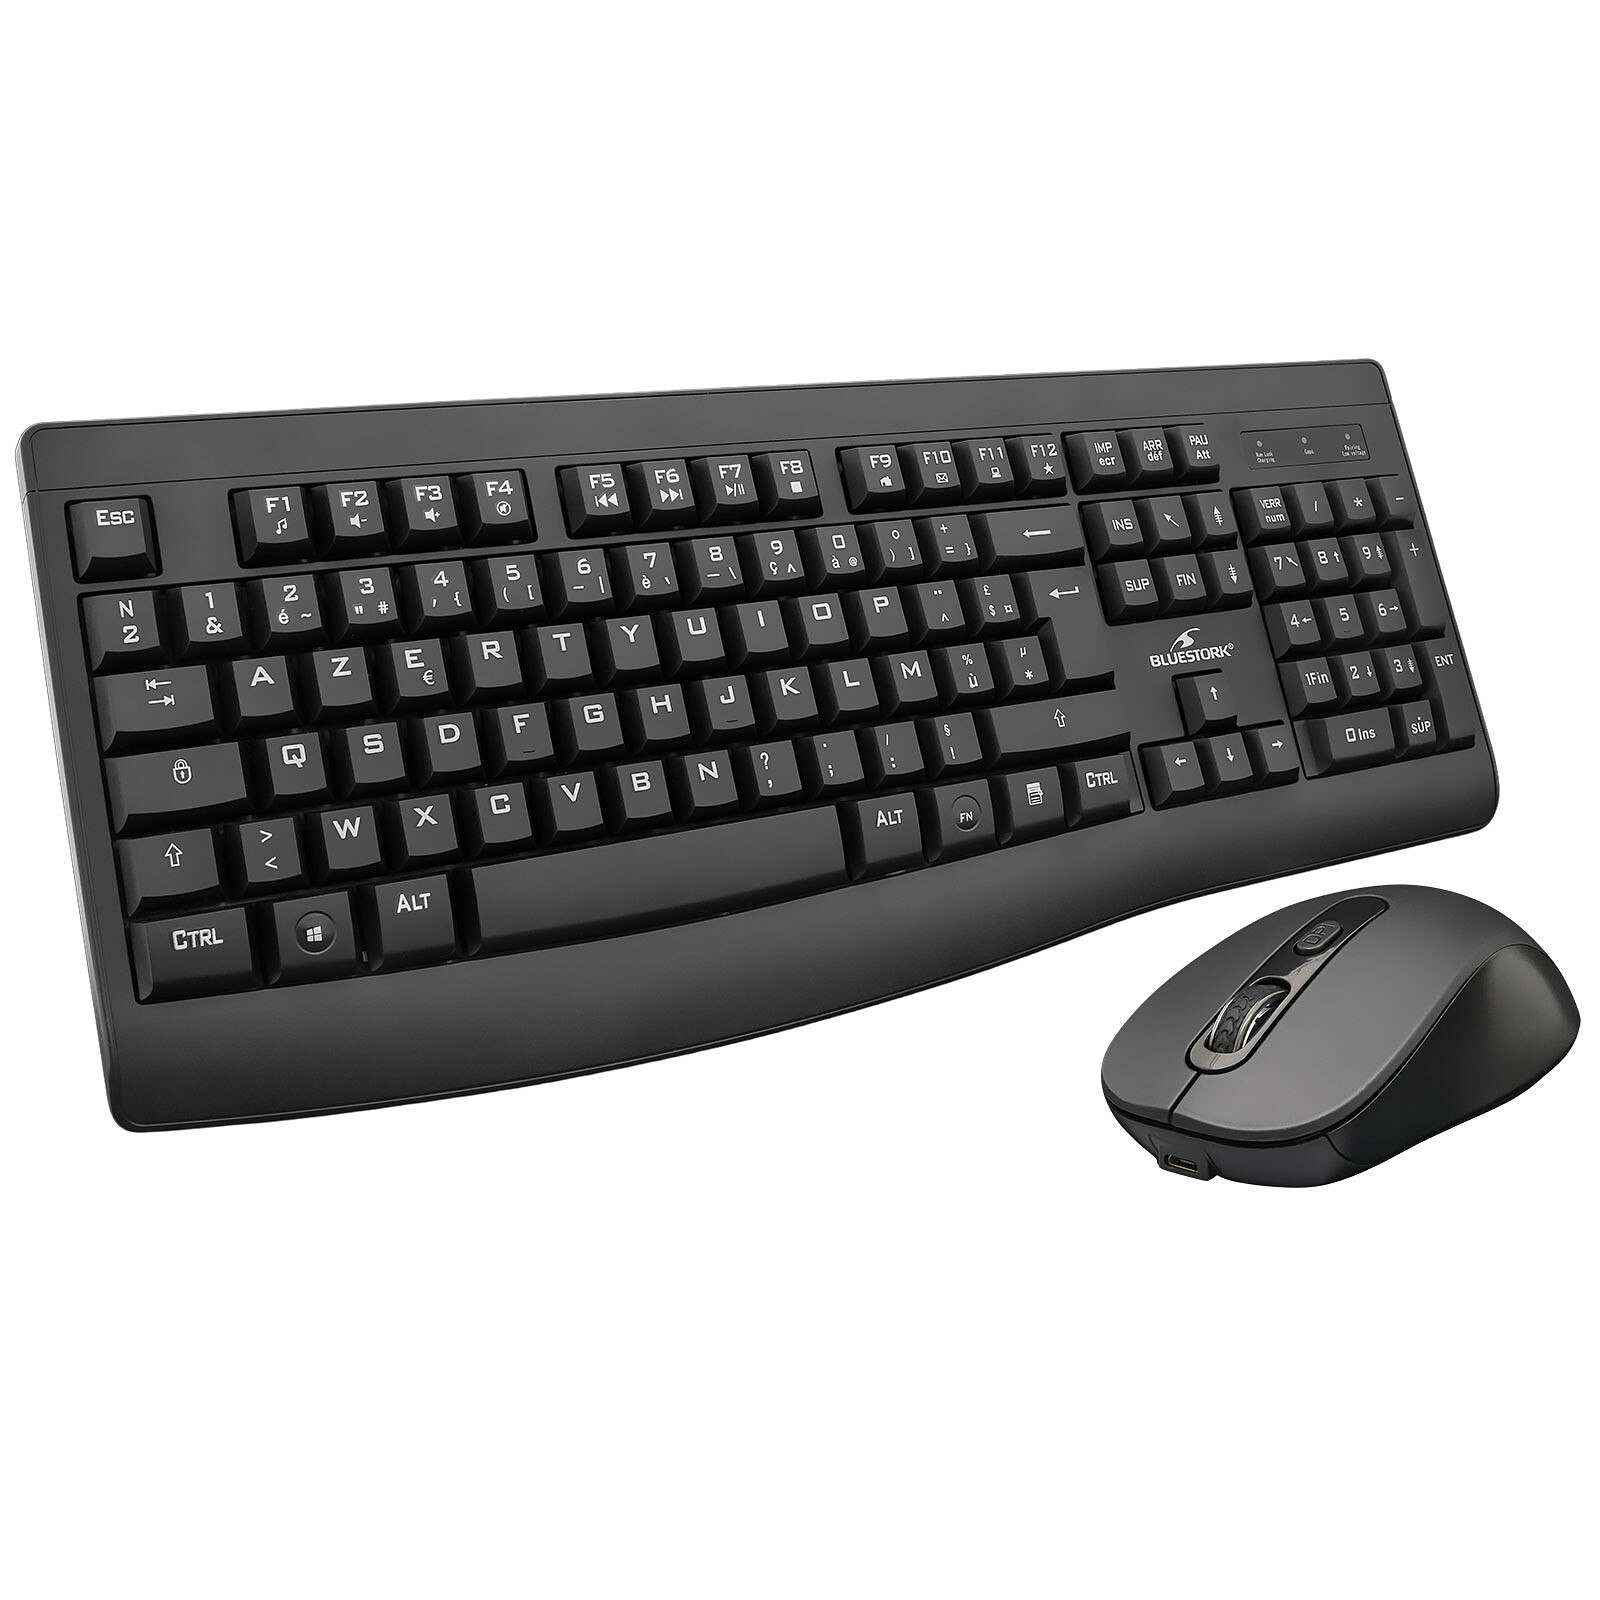 Pack clavier souris sans fil XPERT WIRELESS GAMEBOARD G1100 pour